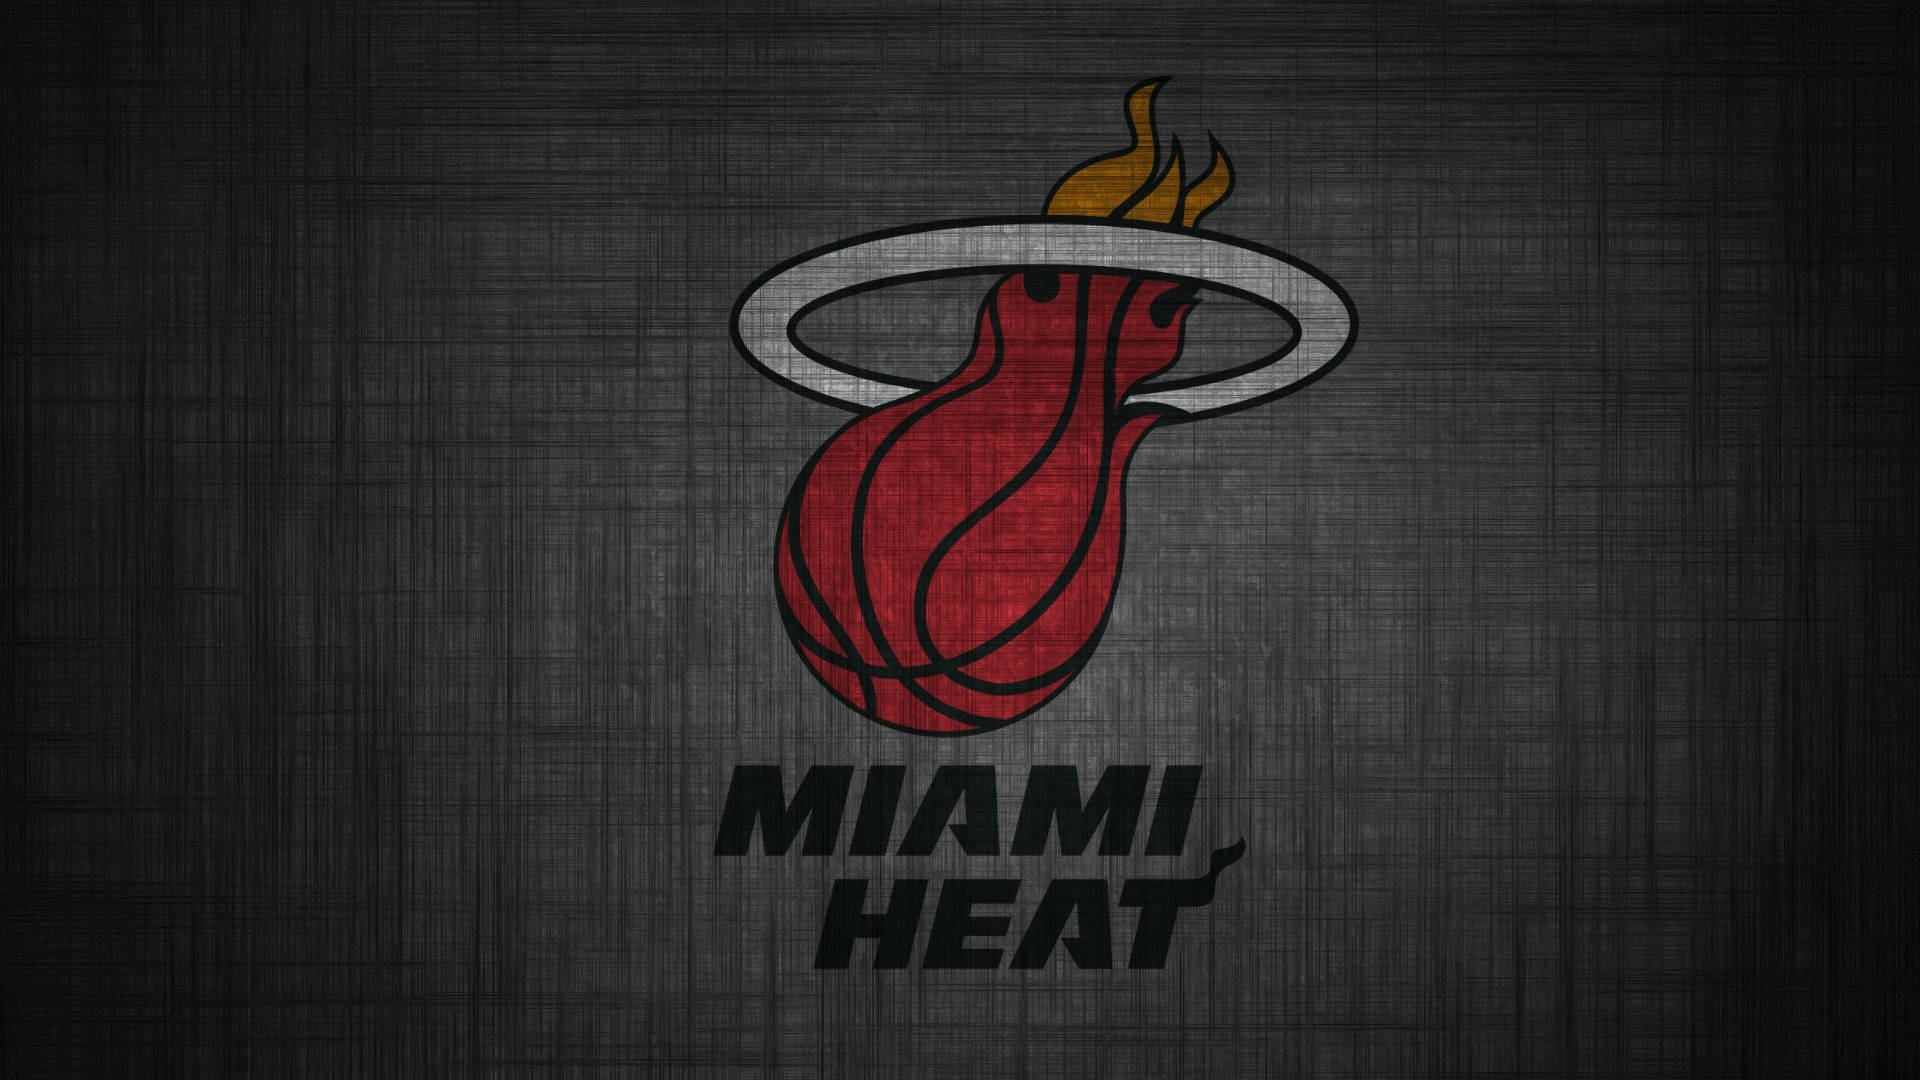 Miami Heat Pictures